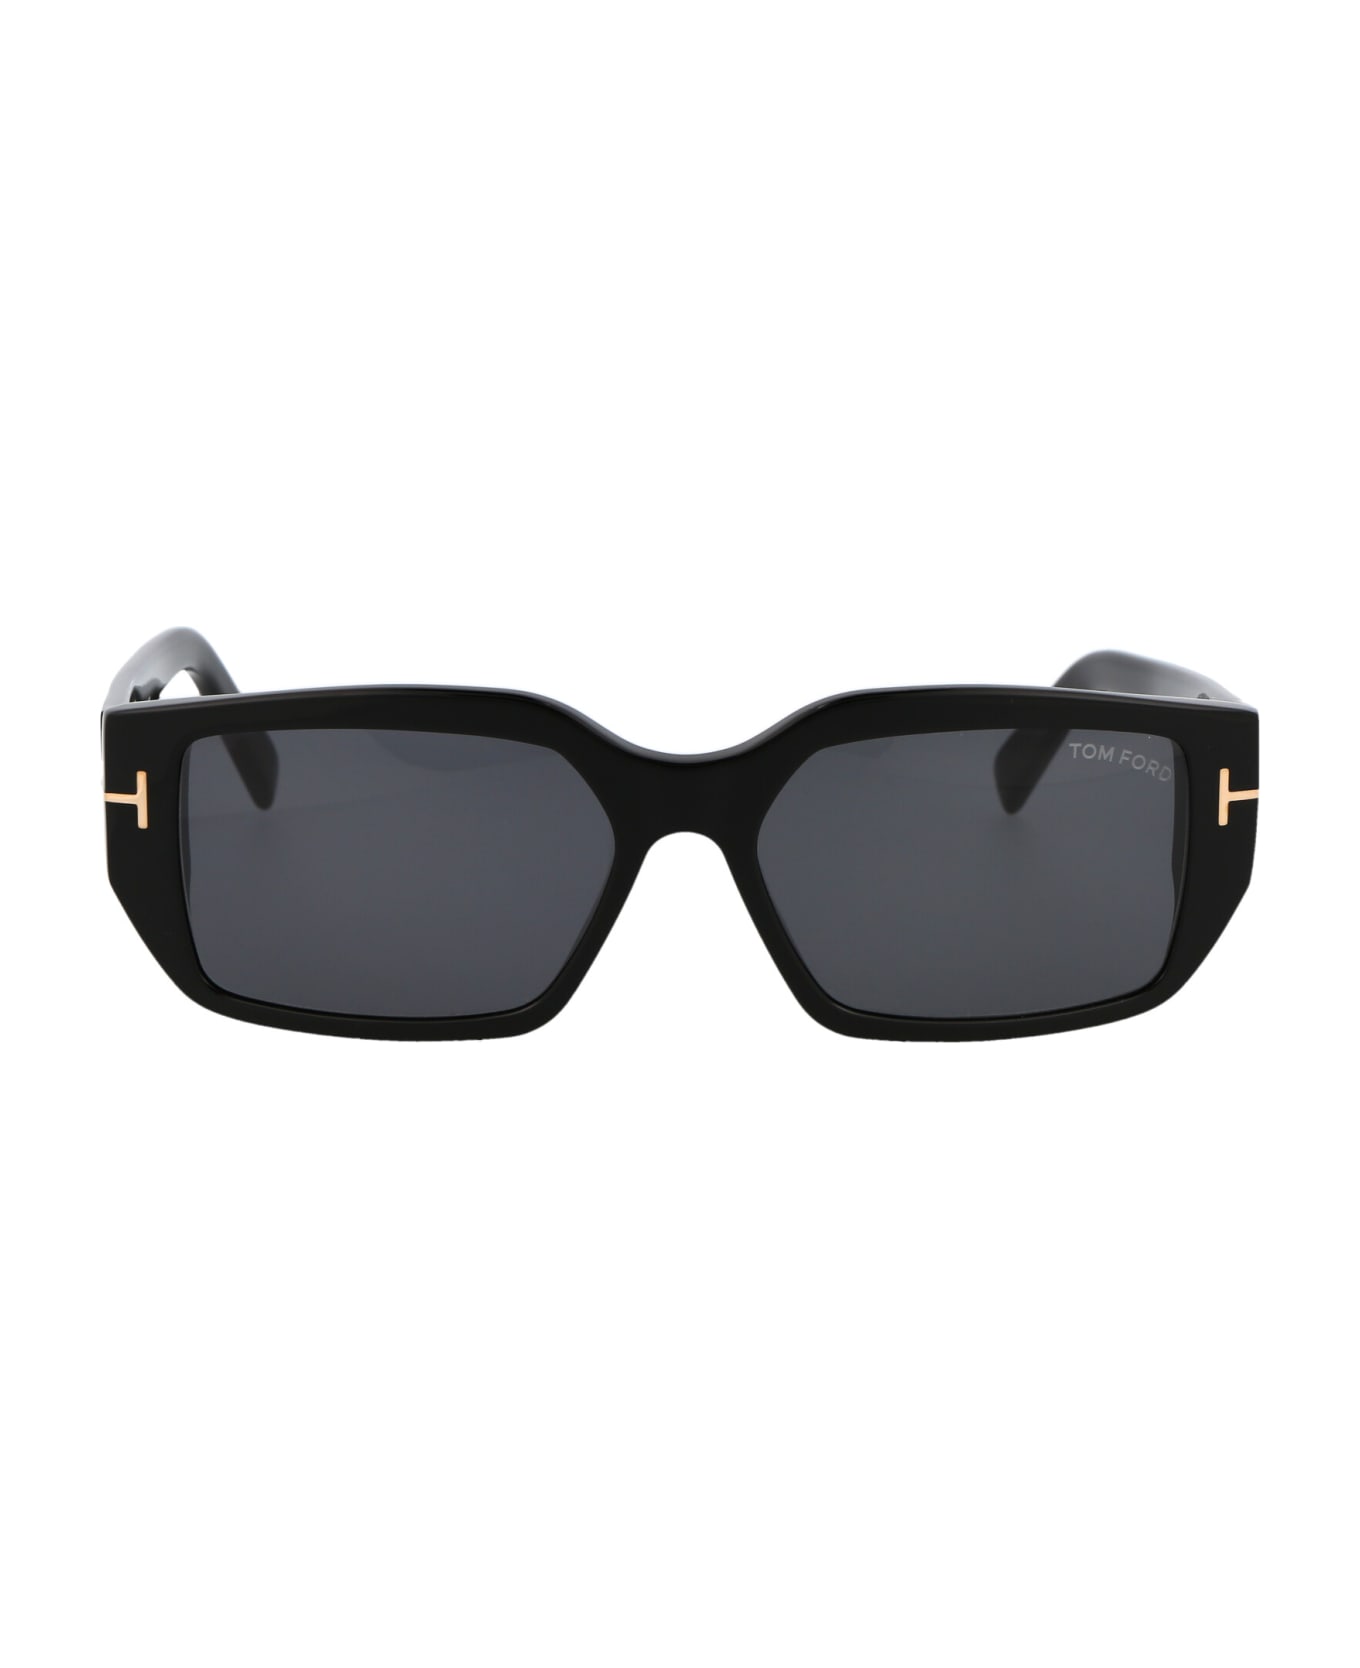 Tom Ford Eyewear Silvano-02 Sunglasses - 01A Nero Lucido / Fumo